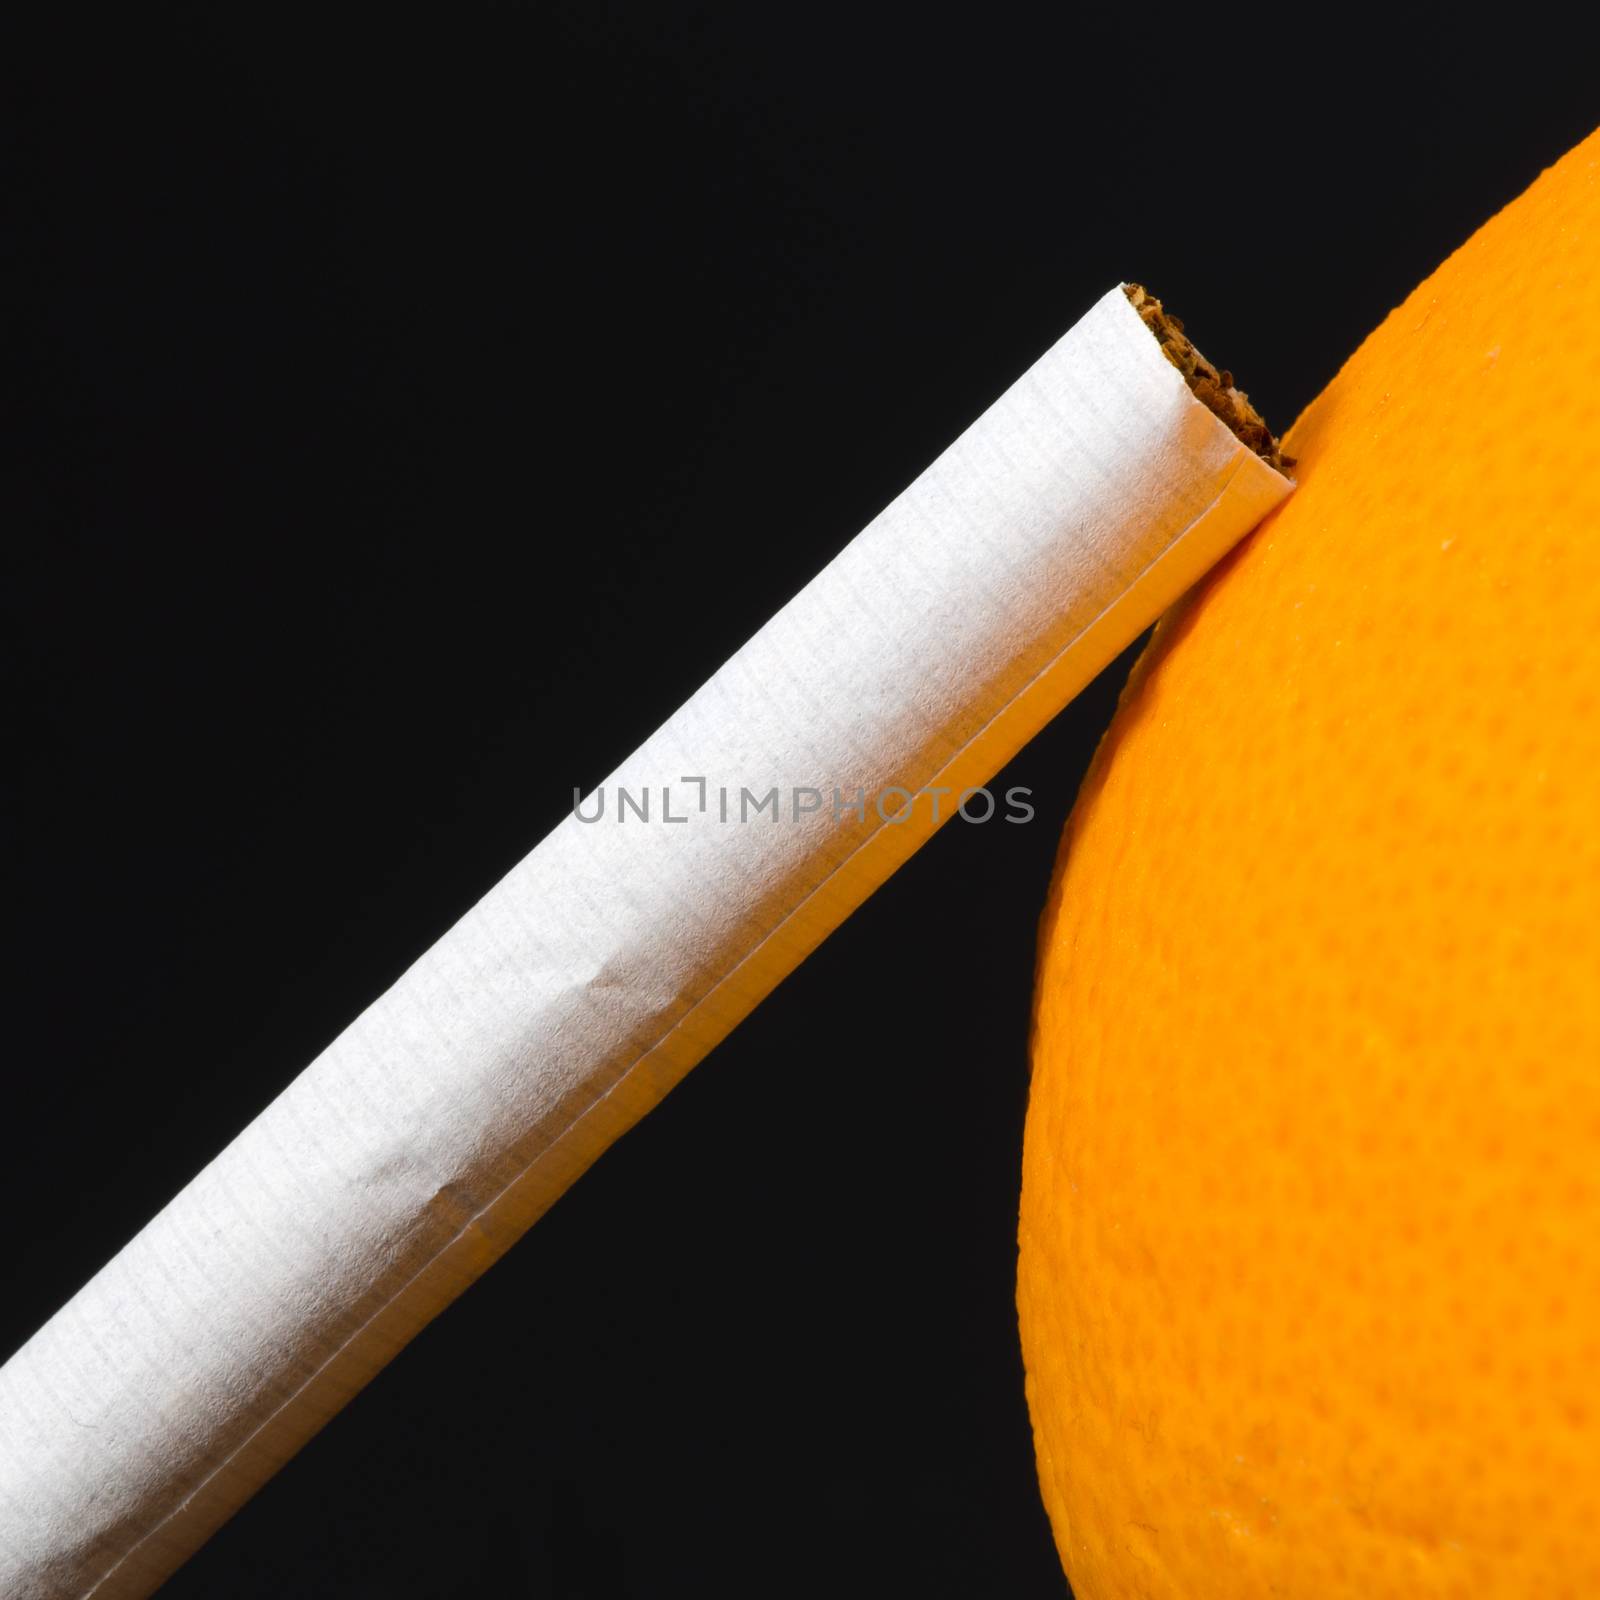 Cigarette and orange by richpav